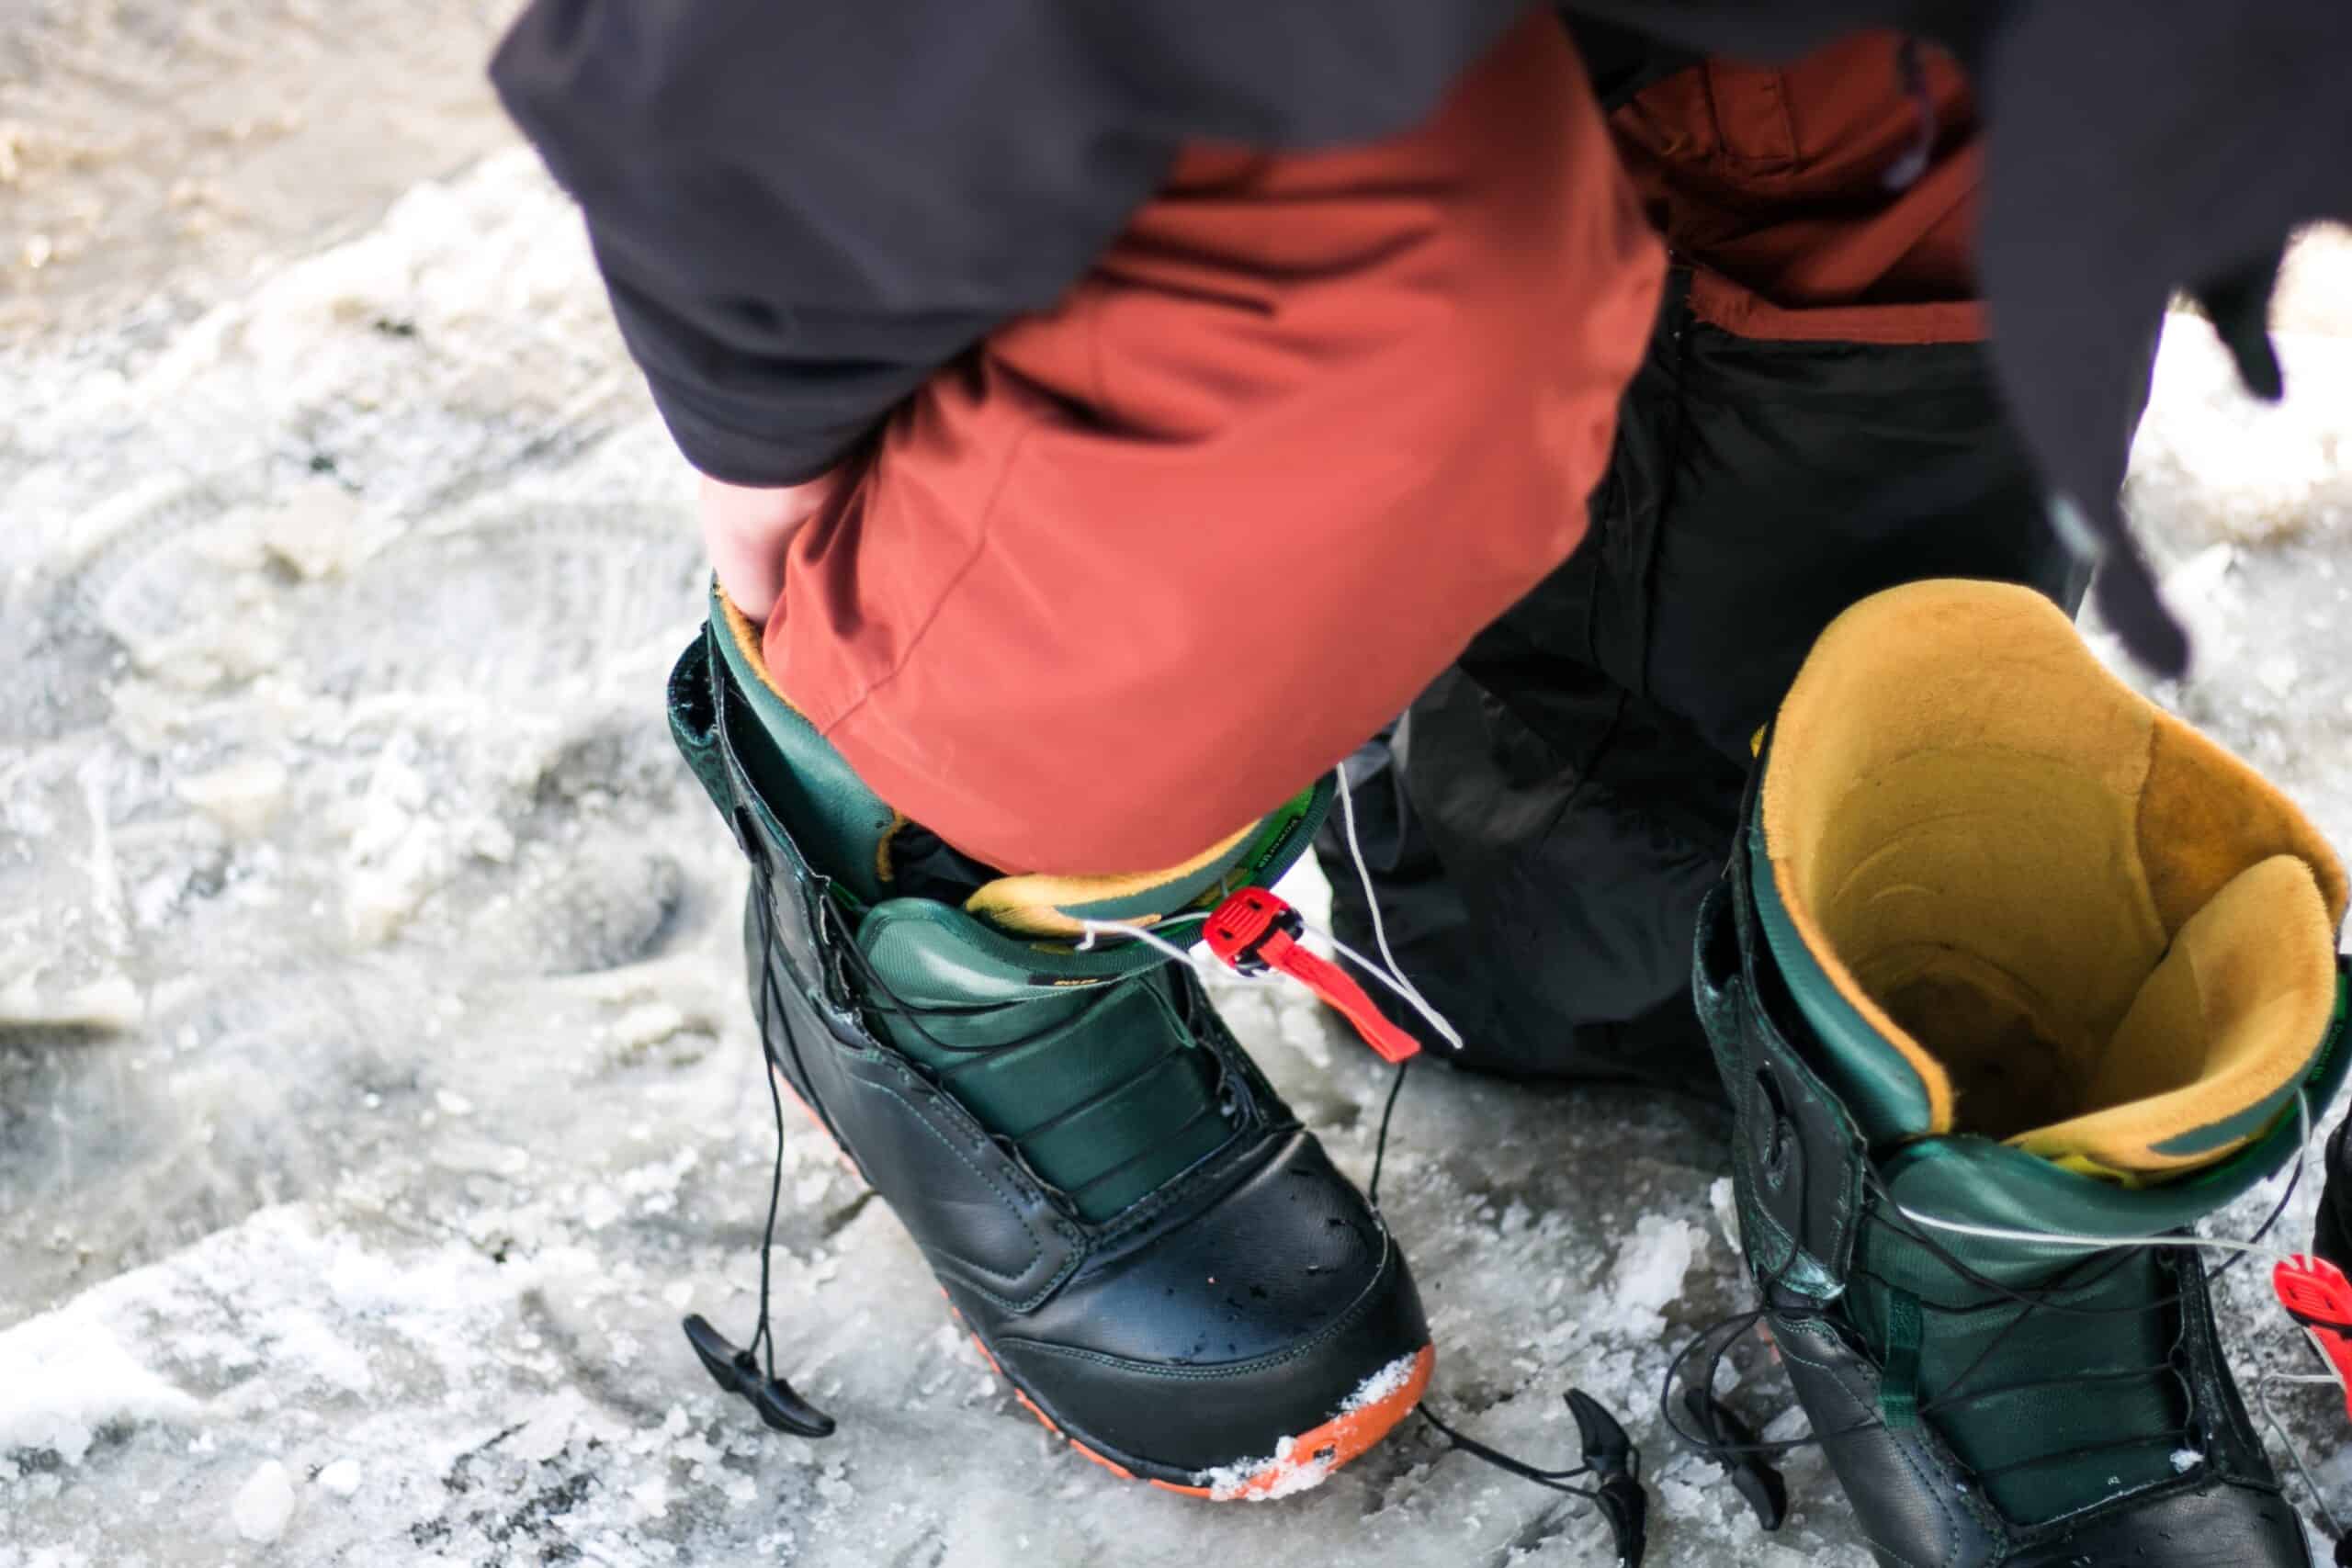 Someone putting on snowboard boots. Photo by Joshua Reddekopp on Unsplash